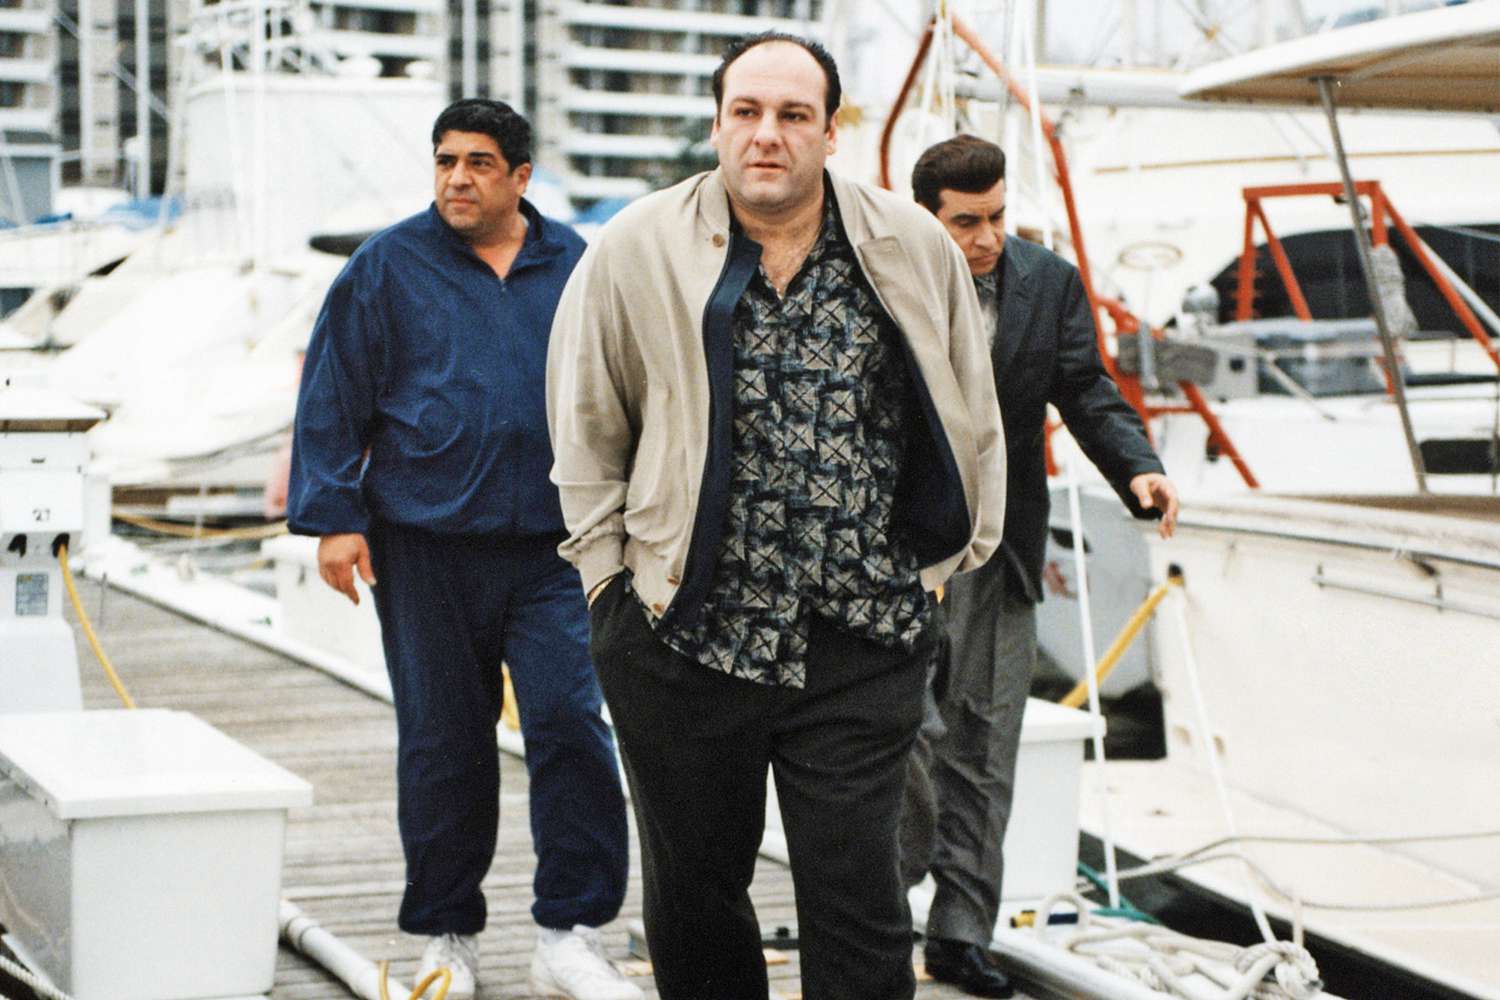 Vincent Pastore, James Gandolfini, and Steven Van Zandt on 'The Sopranos'